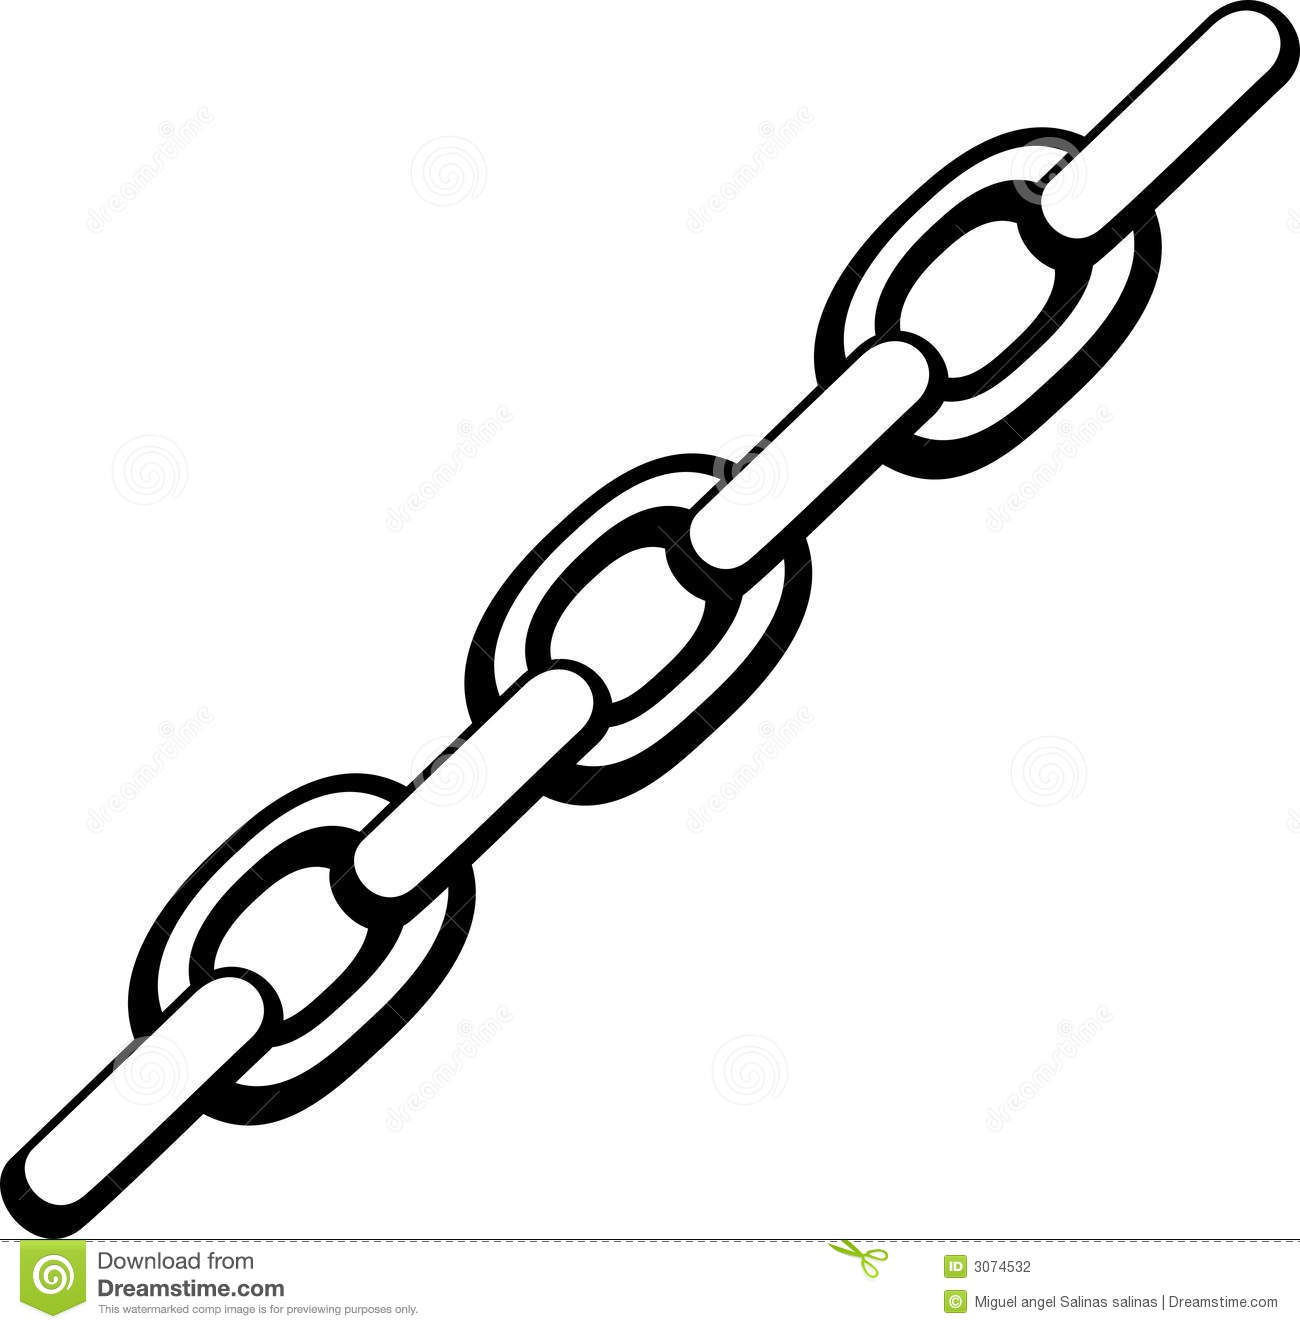 Chain clipart: Chain vector illustration